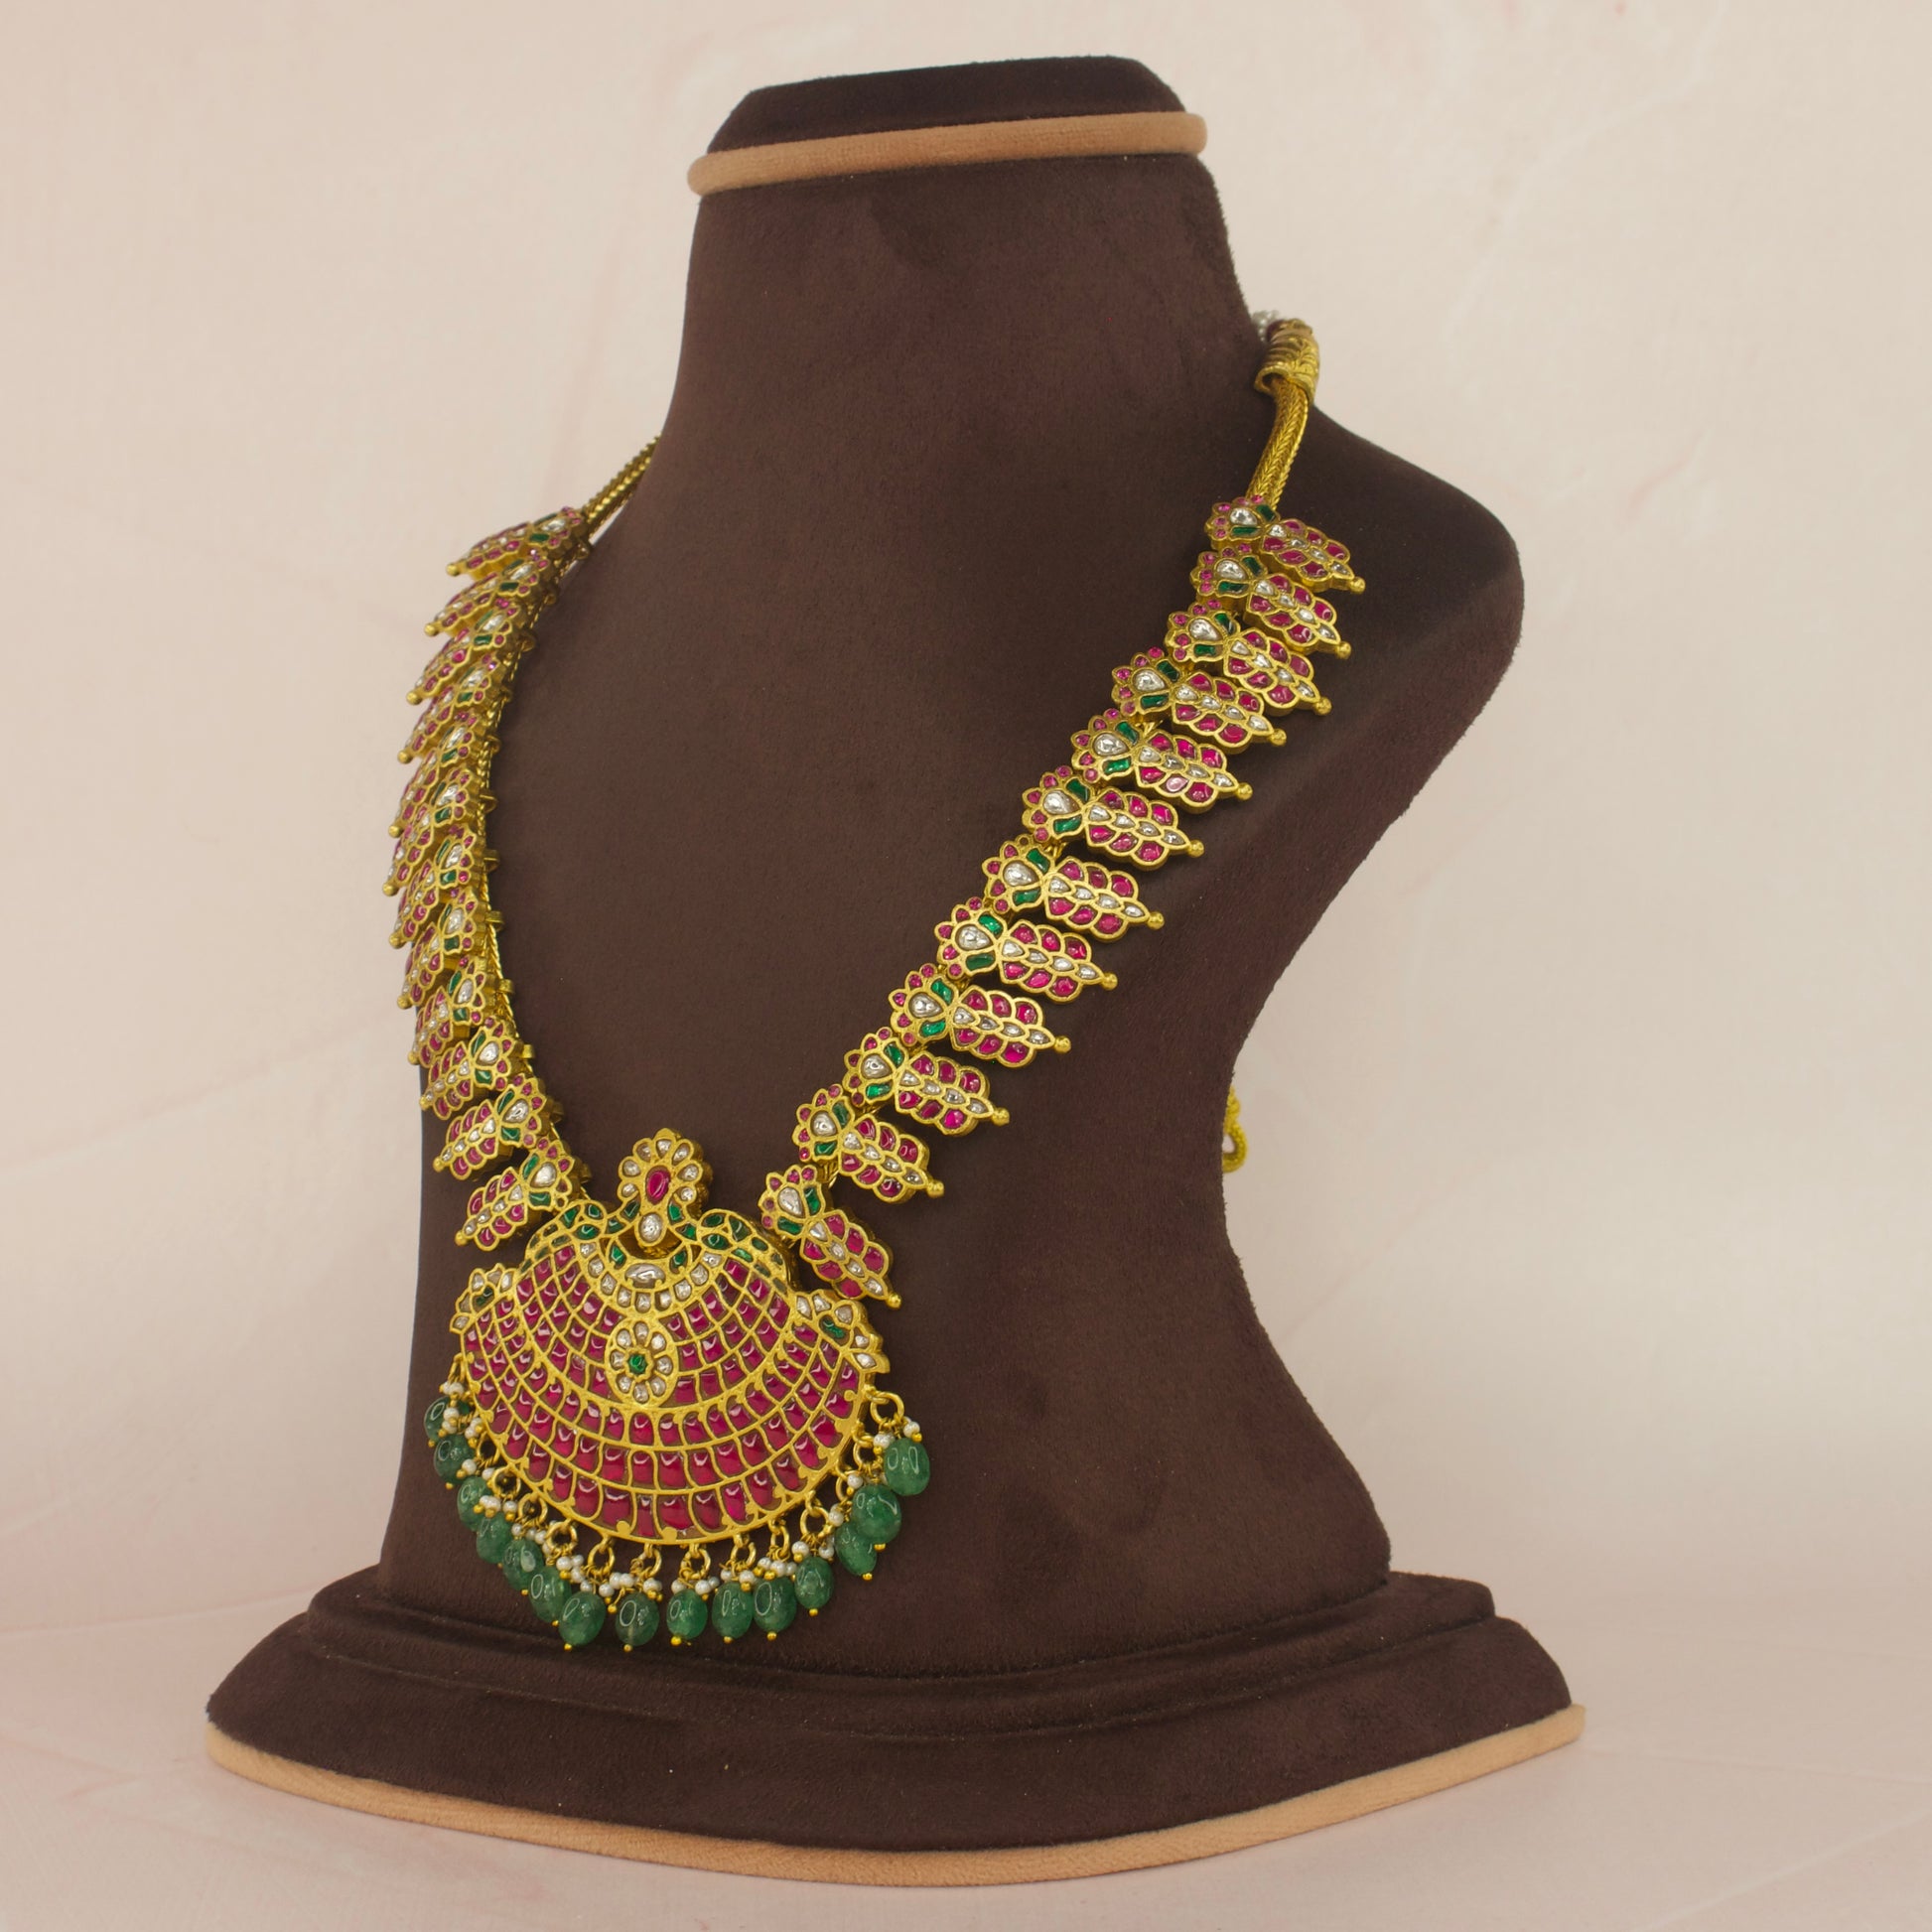 Gold Plated Heavy Jadau Kundan Long Necklace with 22k gold plating. This product belongs to jadau Kundan jewellery category